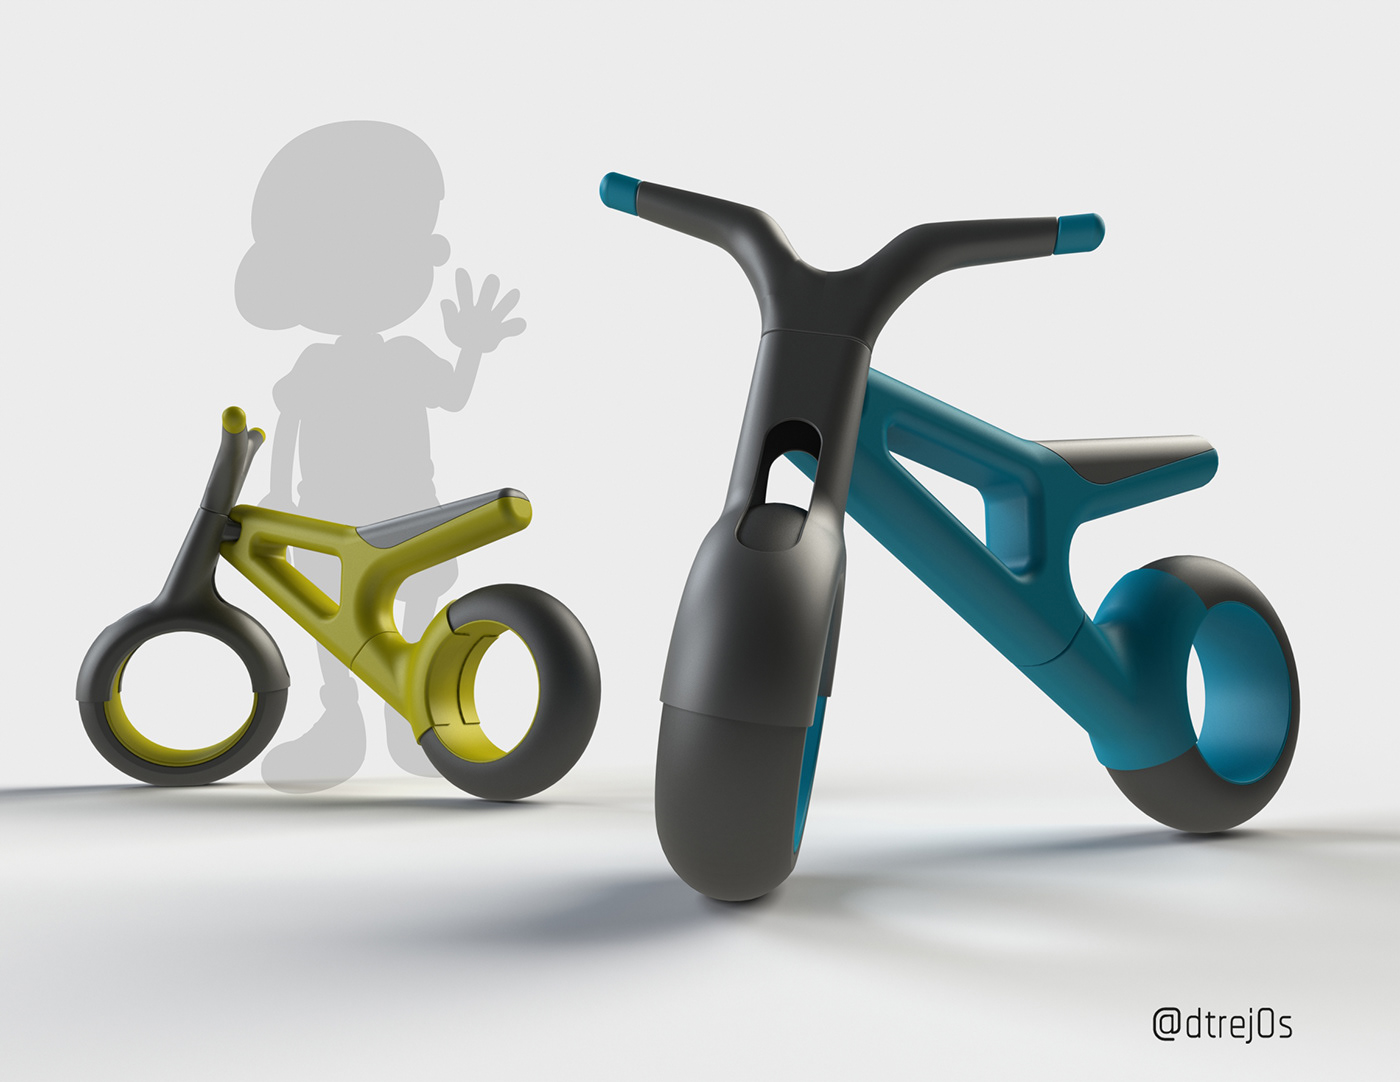 diseño juguetes producto productos infantiles motos infantiles diseño industrial transporte